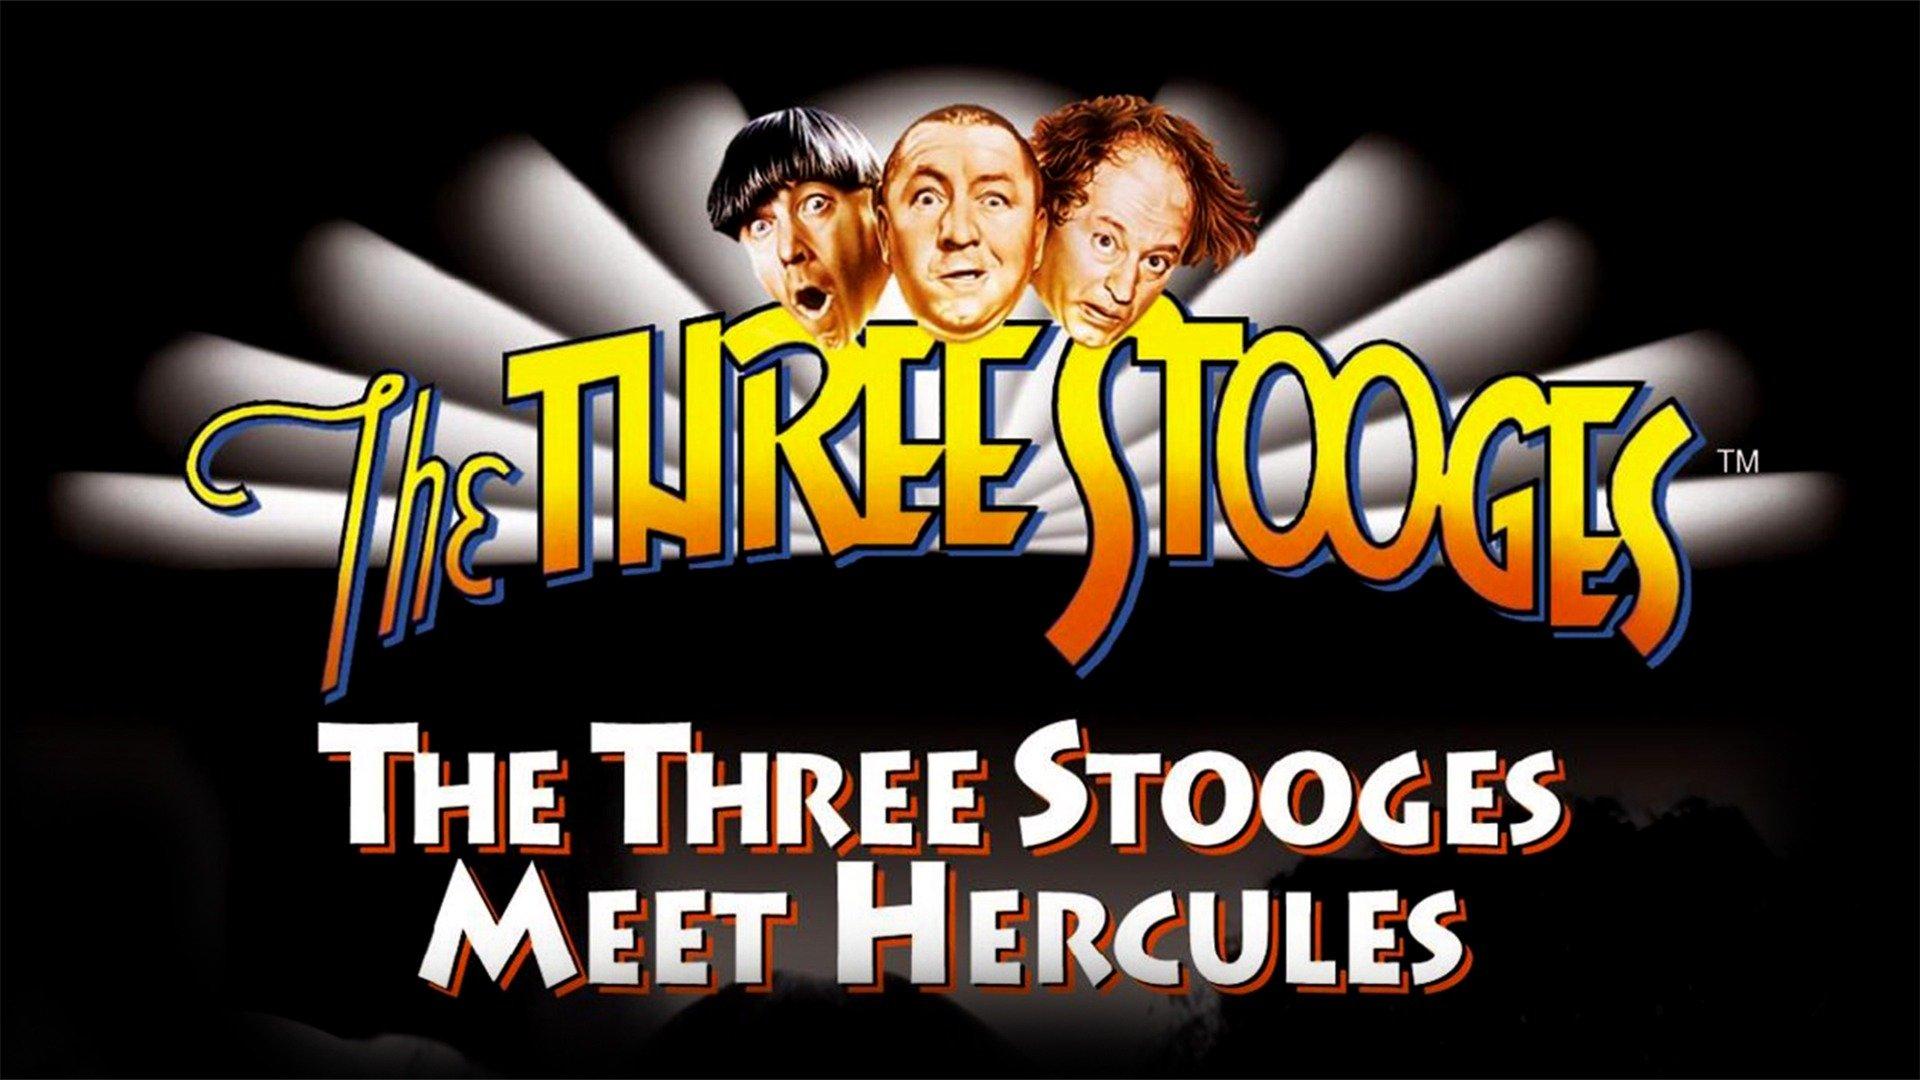 Three stooges cookie jar